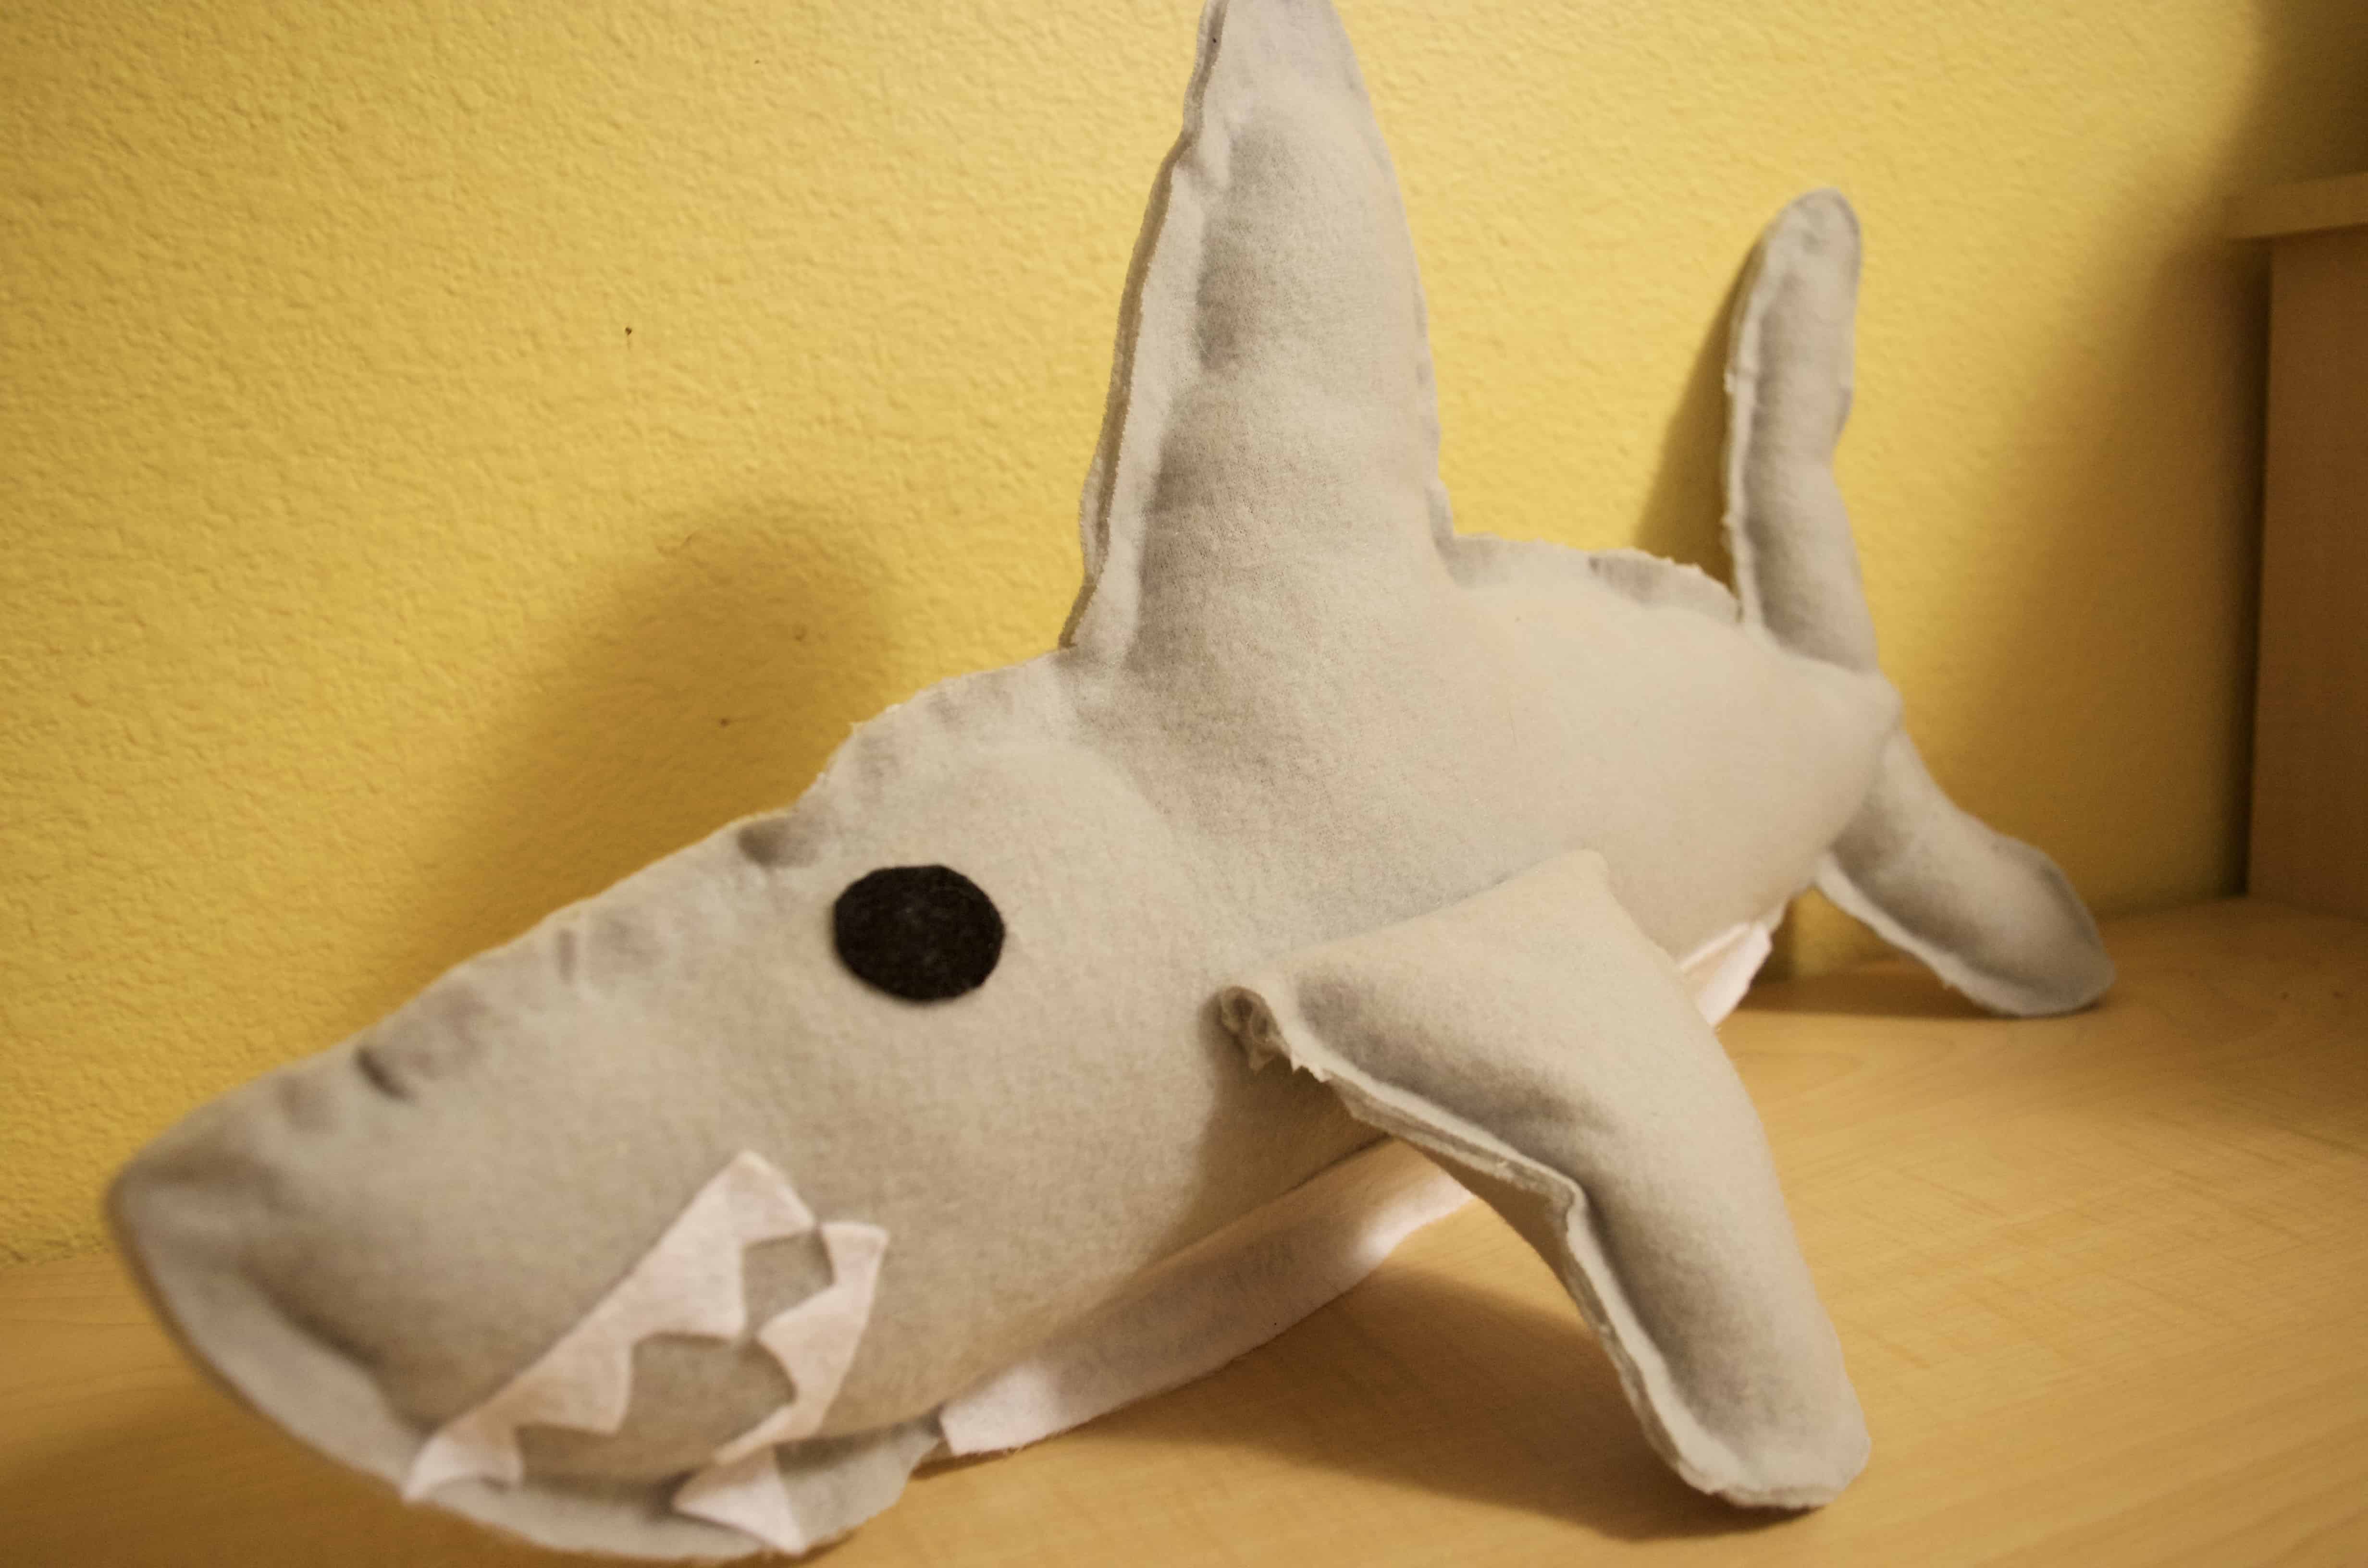 NO SEW DIY Personalized Shark Tote Bag Kit